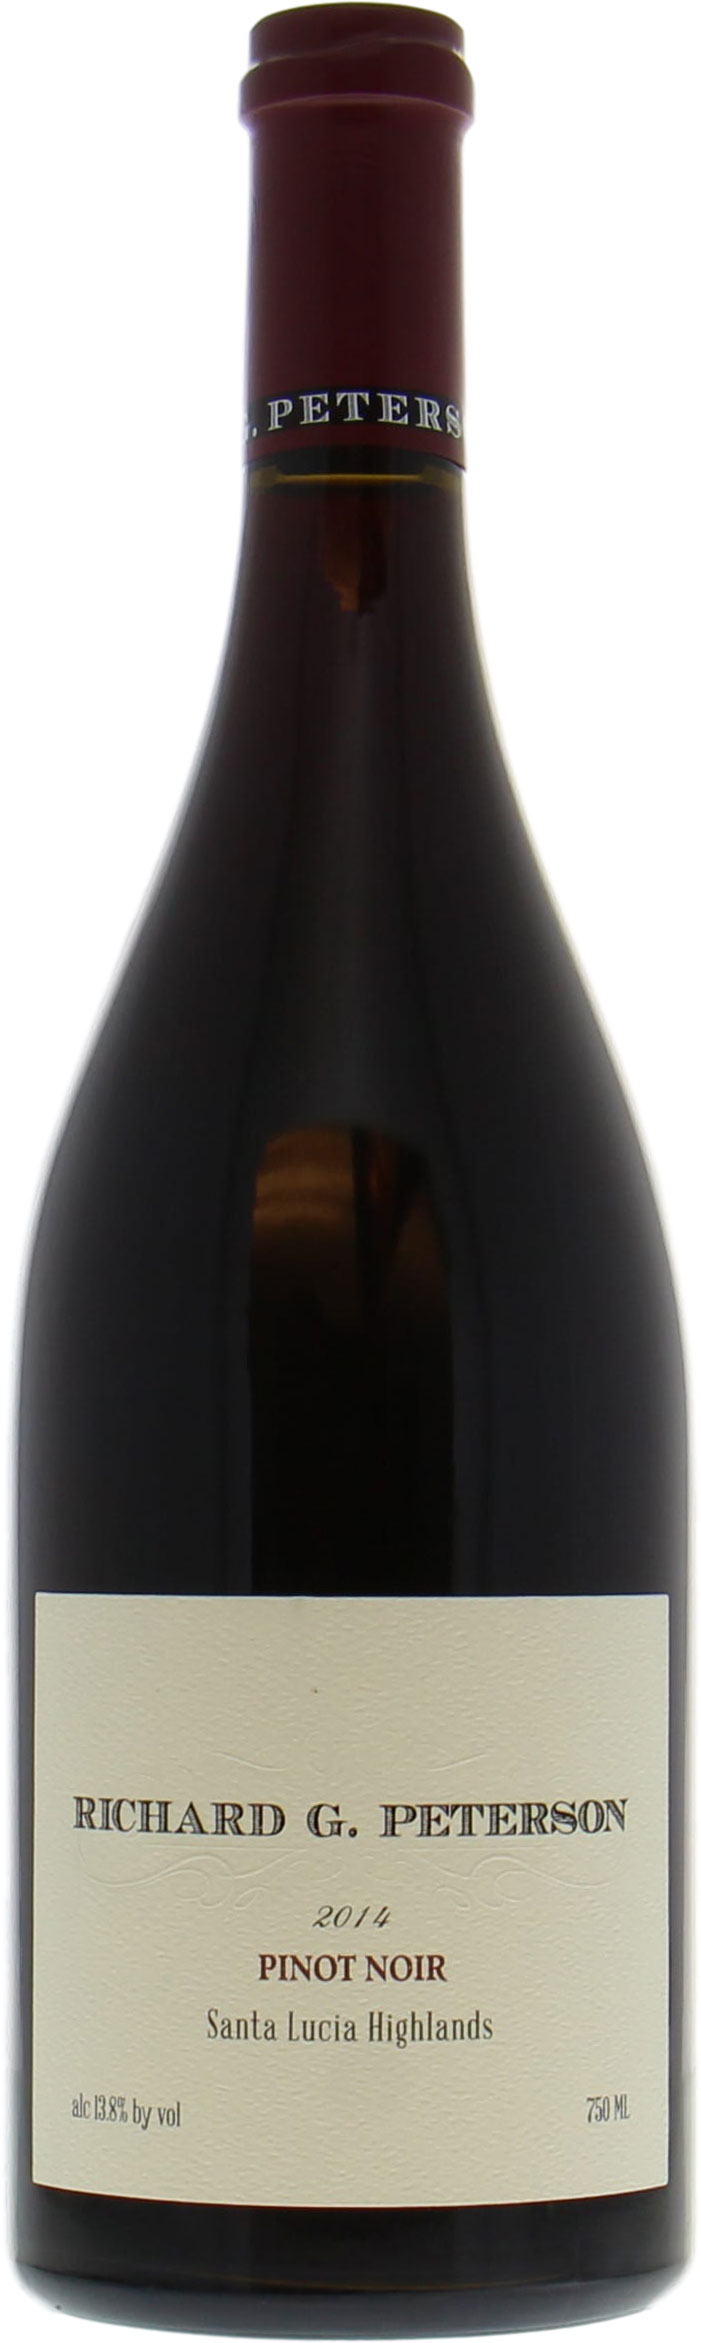 Amuse Bouche Richard G, Peterson - Pinot Noir Santa Lucia Highlands 2014